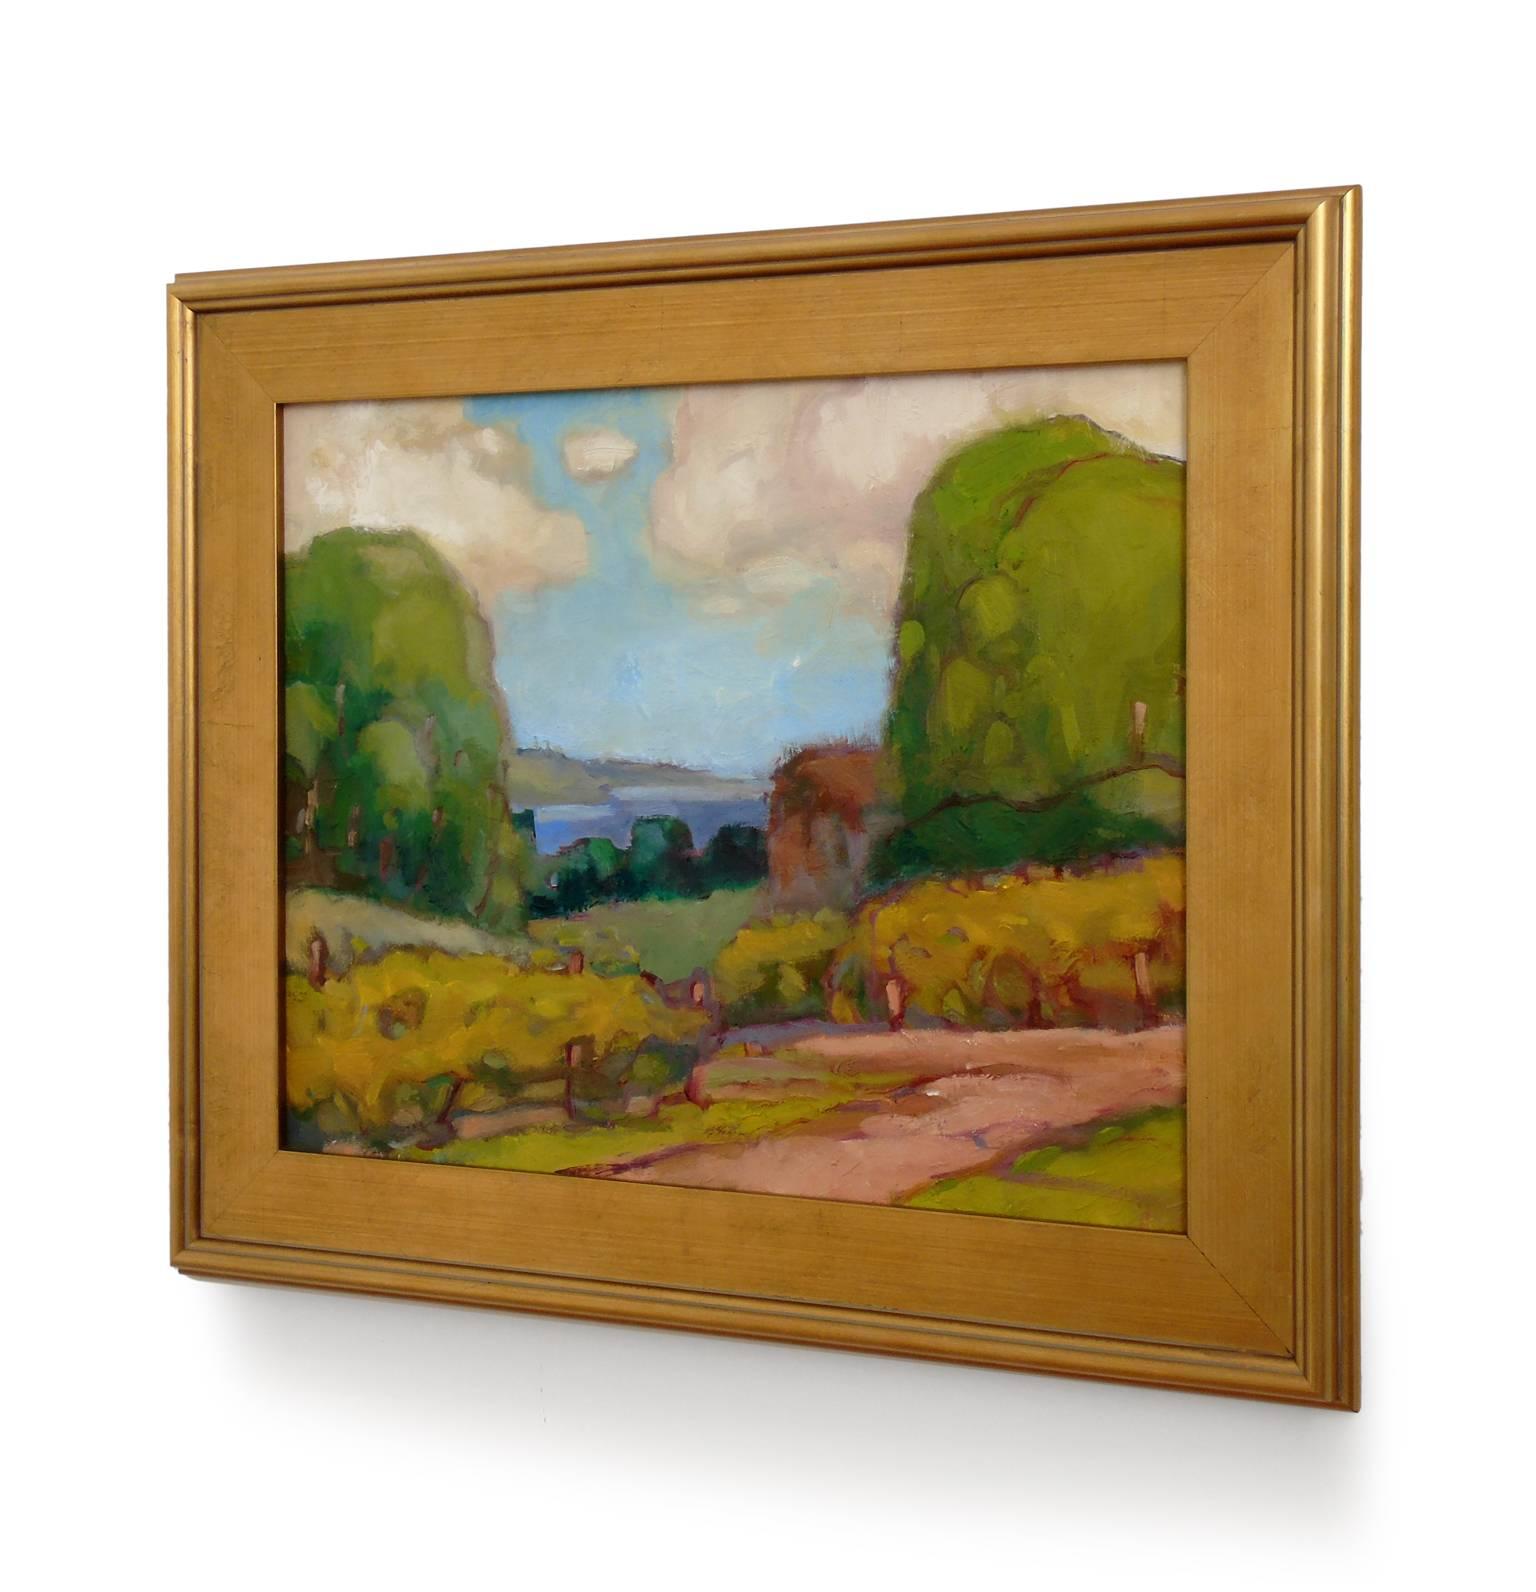 View of Seneca Lake - Painting by Robert Glisson